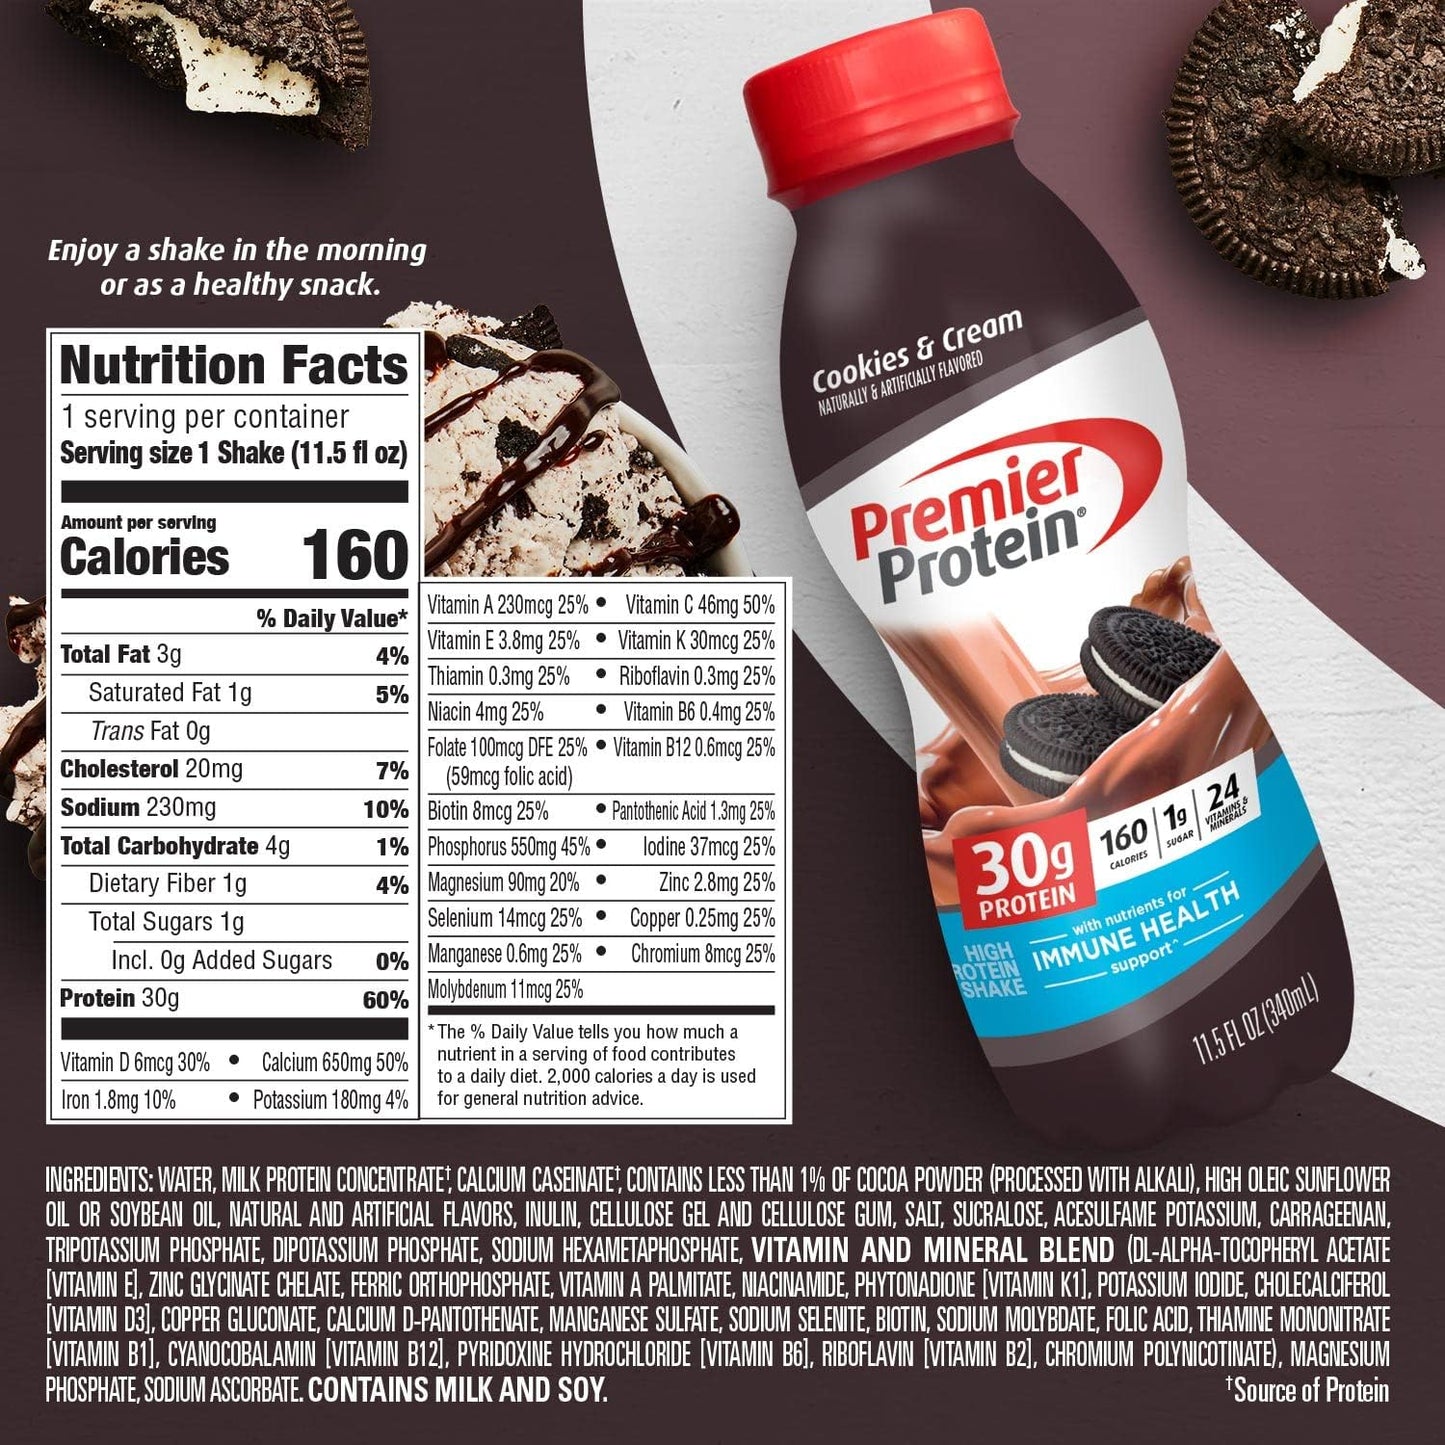 Premier Protein 30g Protein Shake, Cookies & Cream, 11.5 fl oz Shake, (12 count)